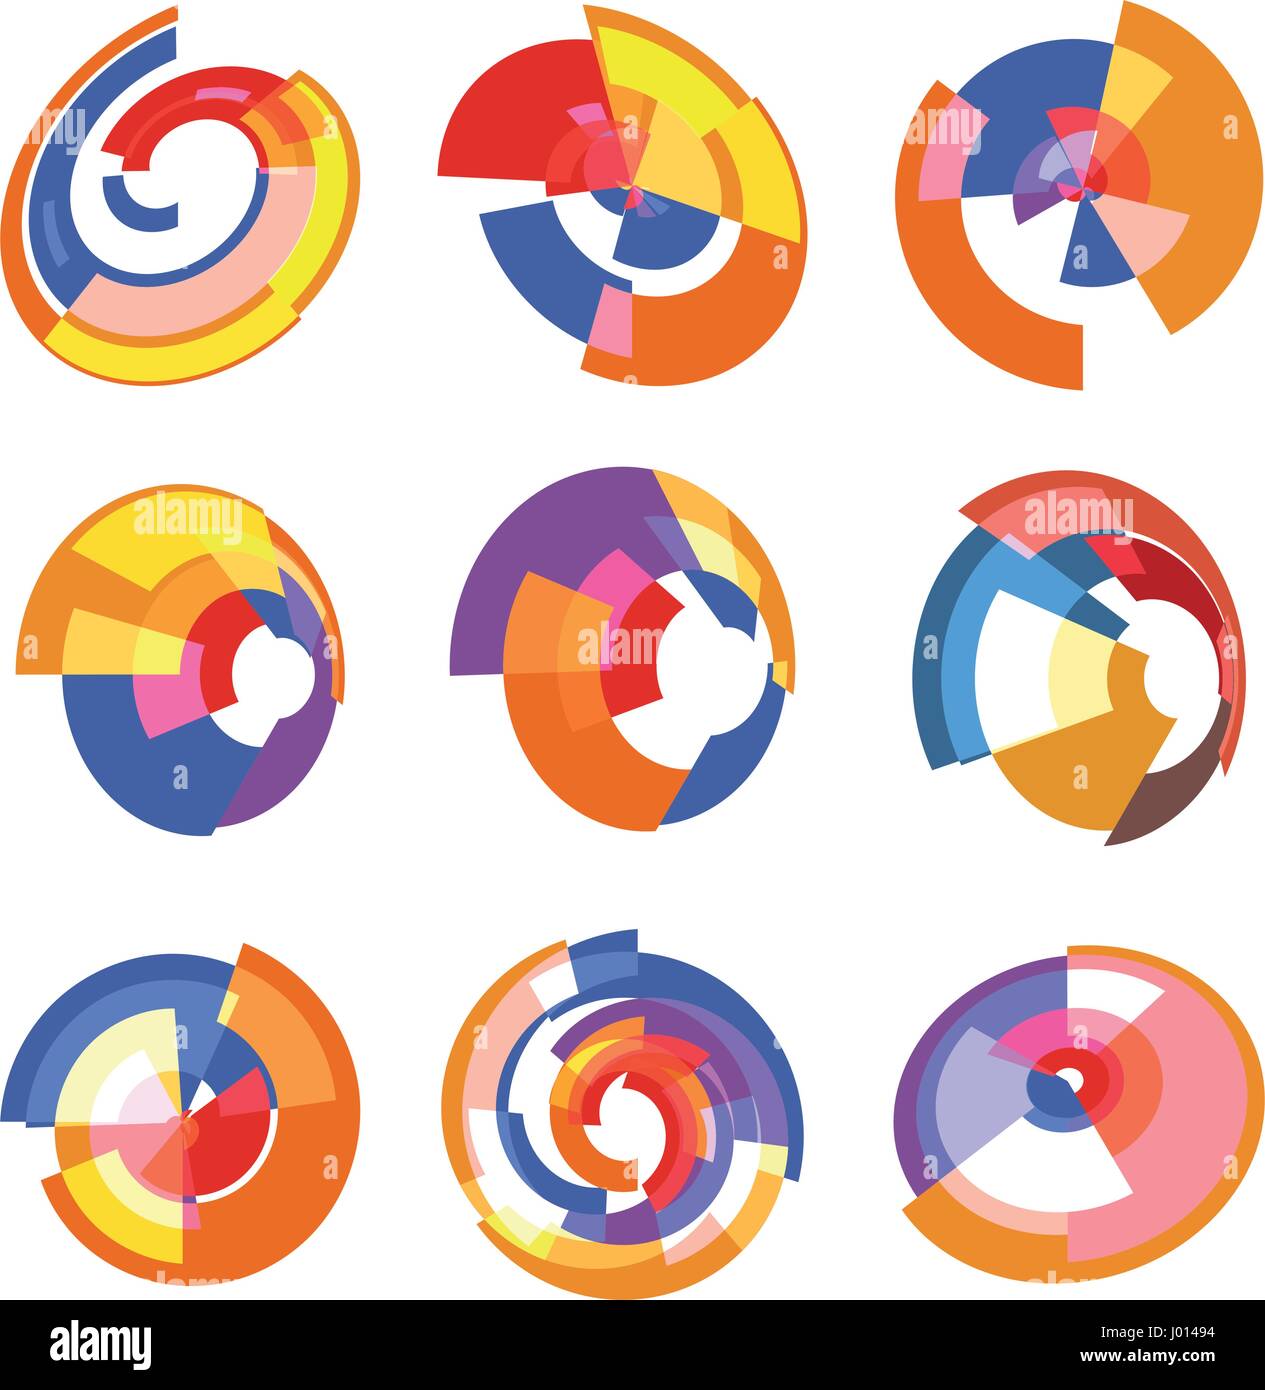 Isolierte abstrakte farbige Kreisdiagramm Logos Set, runde Form Diagramm Logos Sammlung, Infografik-Element-Vektor-illustration Stock Vektor